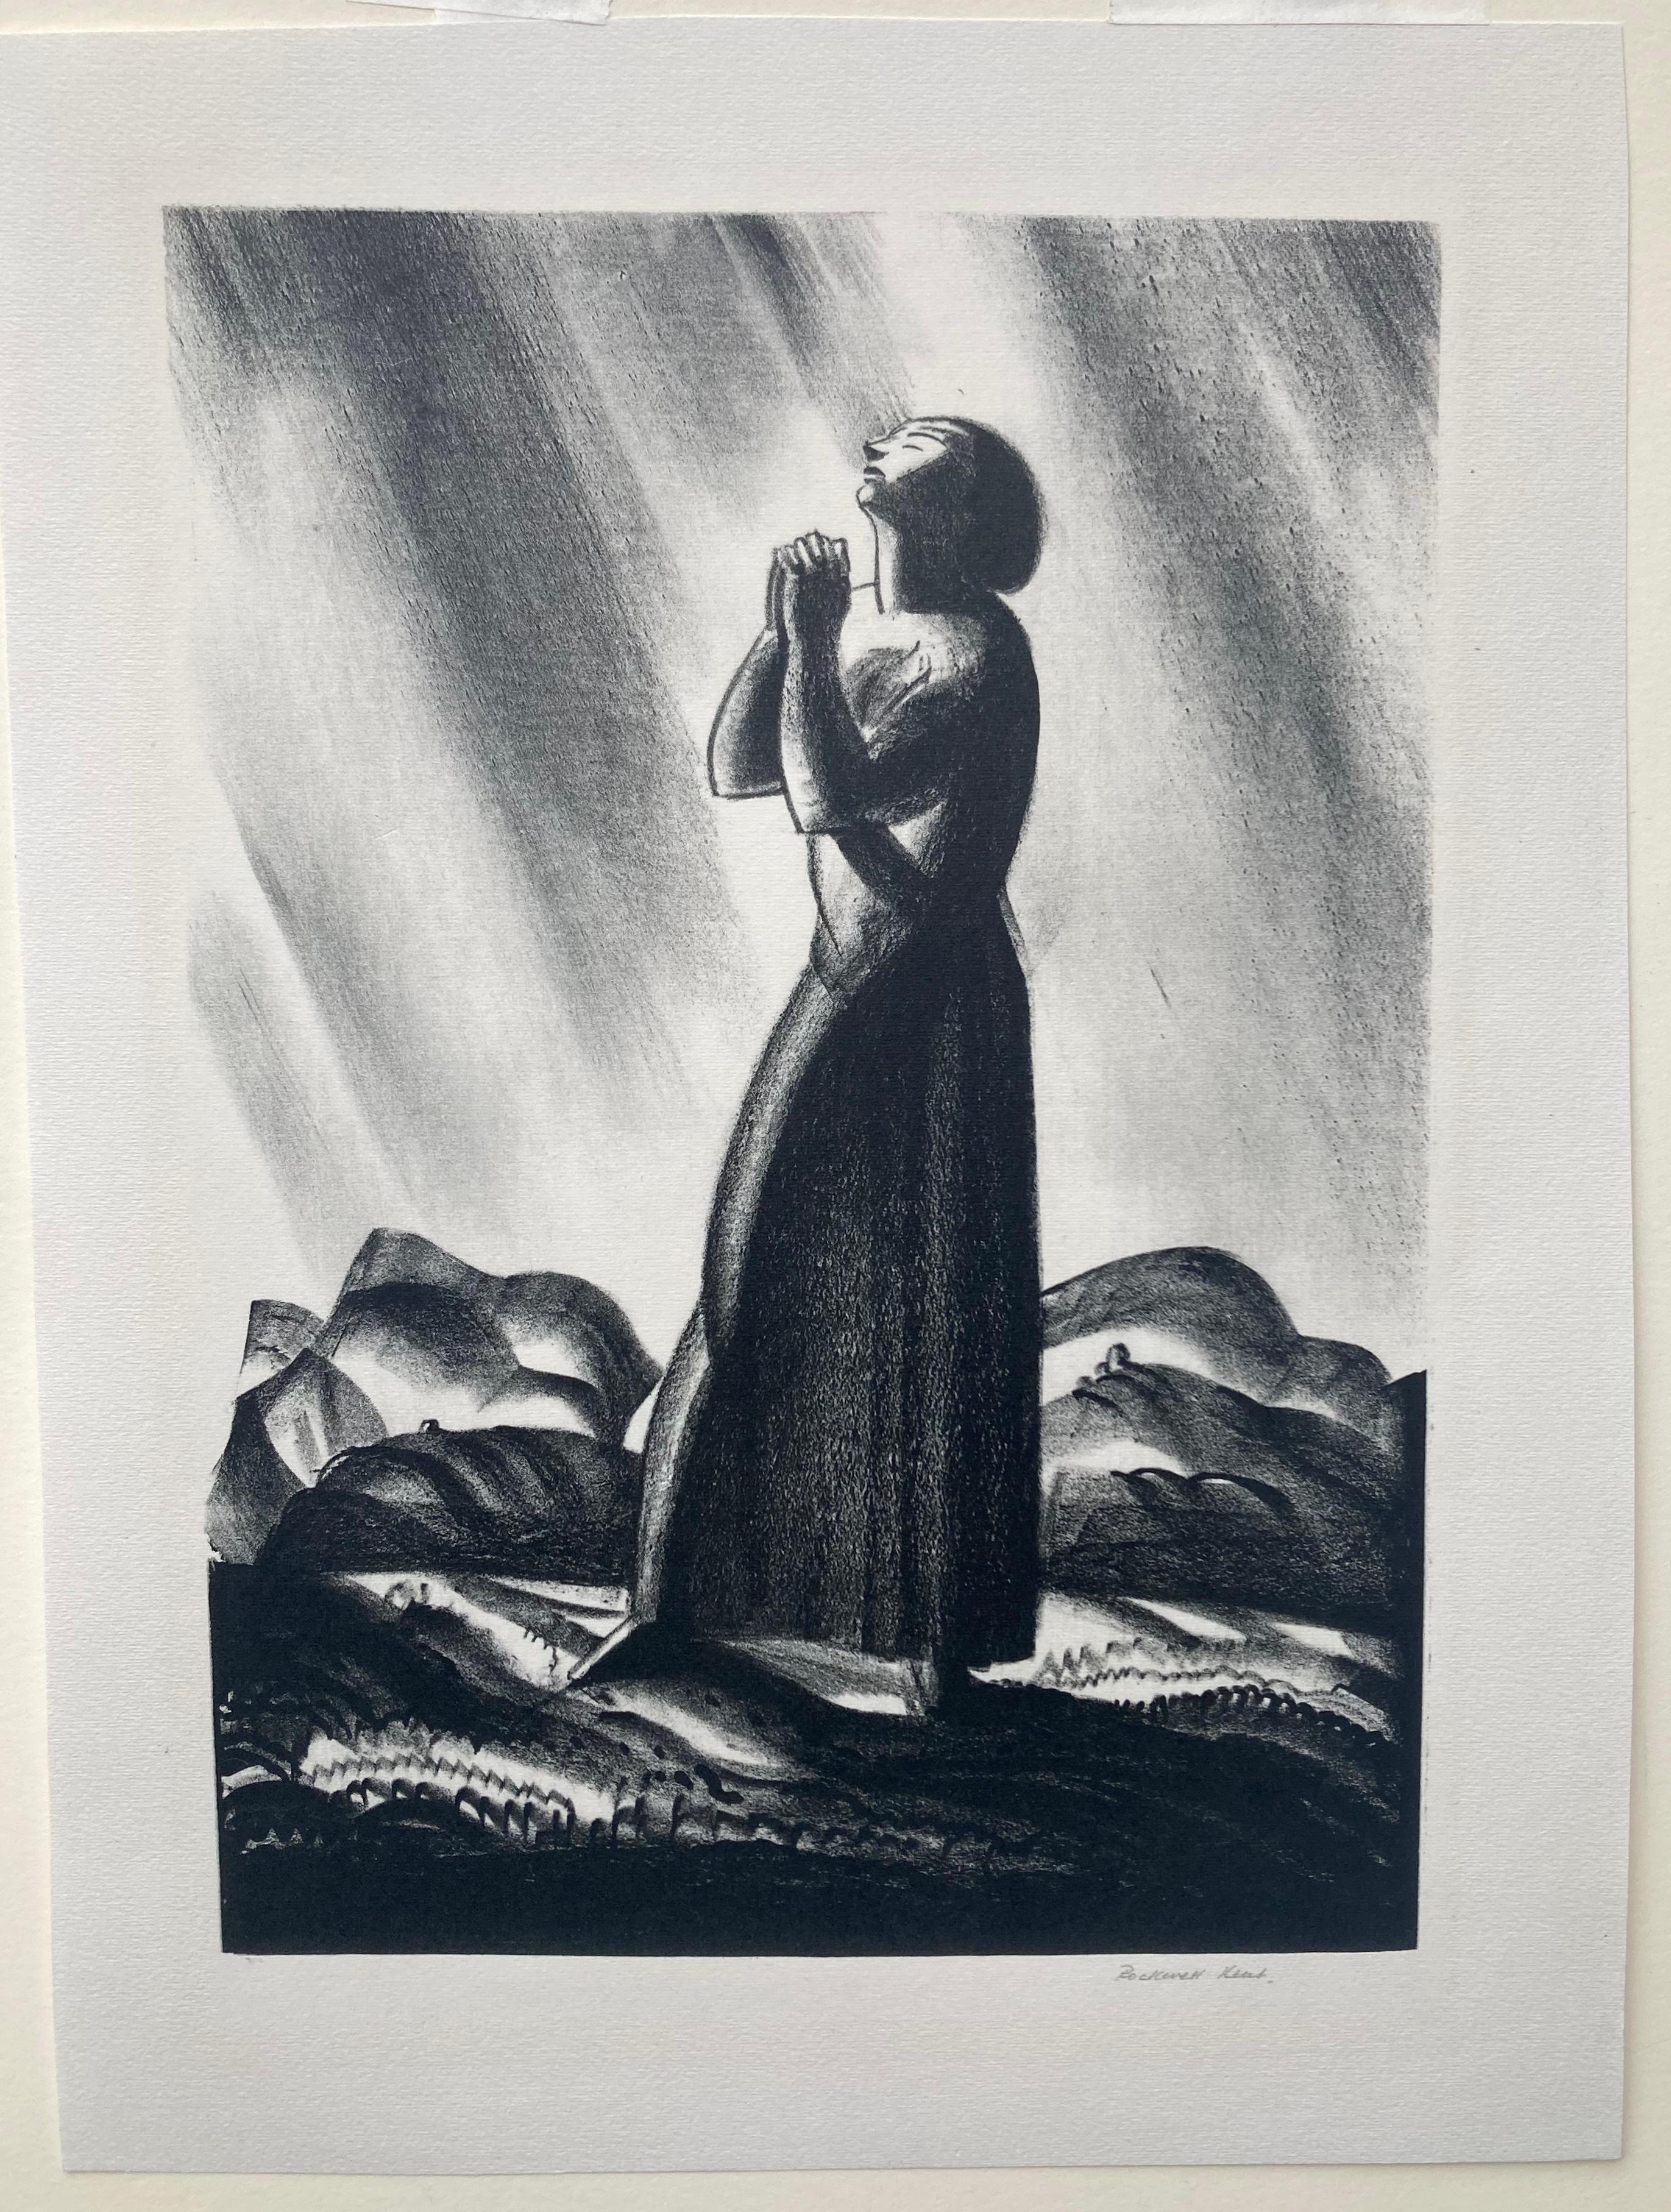 MEDITATION - Print by Rockwell Kent